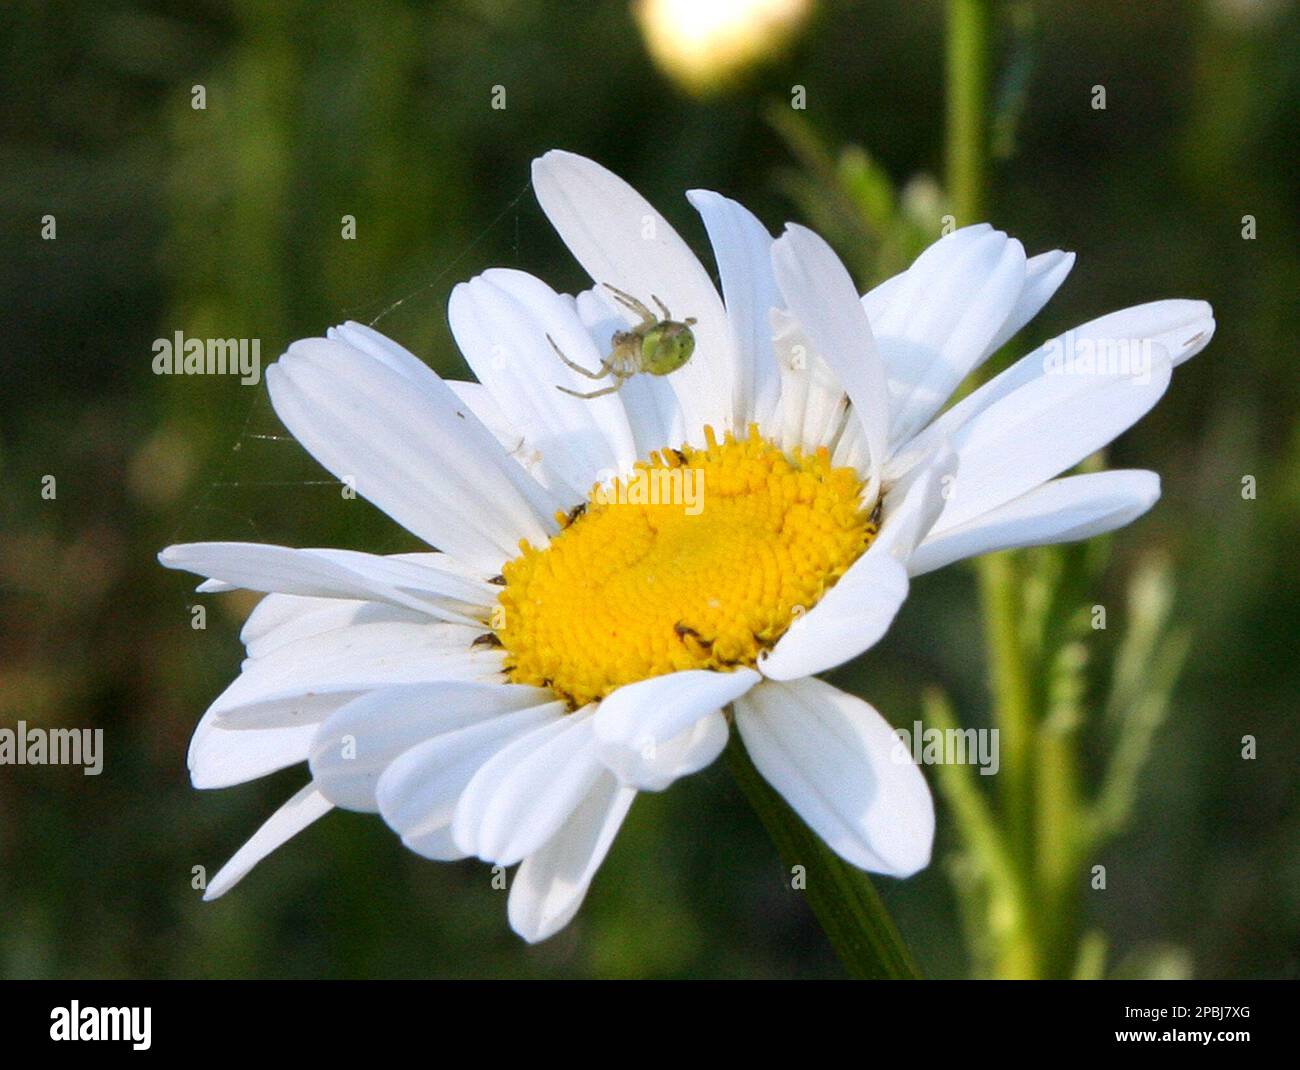 Spinne im Netz Spider in the web Stock Photo - Alamy